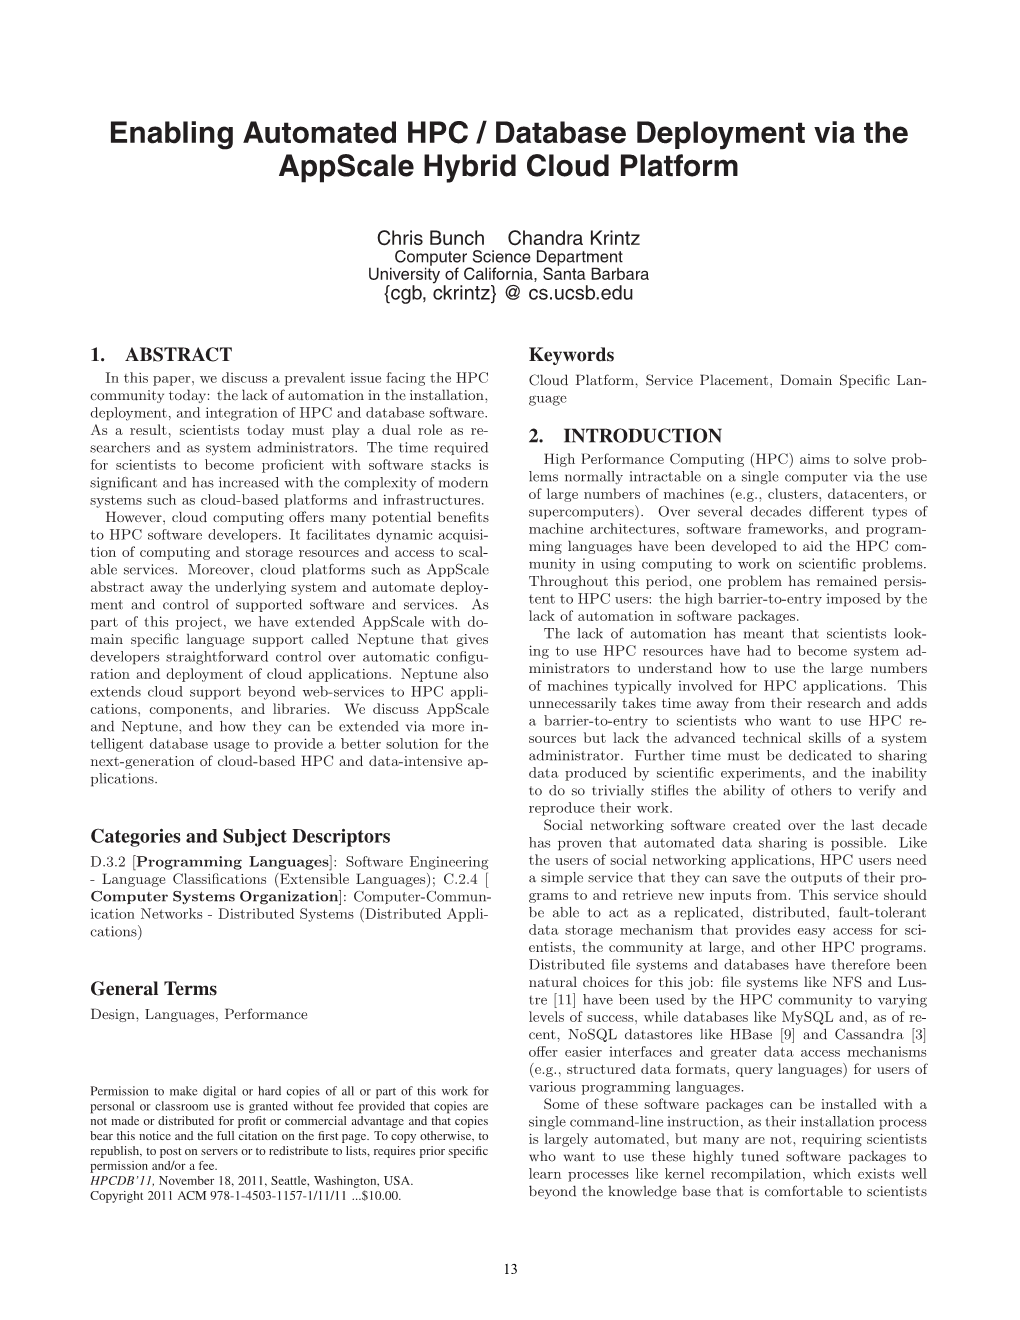 Enabling Automated HPC / Database Deployment Via the Appscale Hybrid Cloud Platform